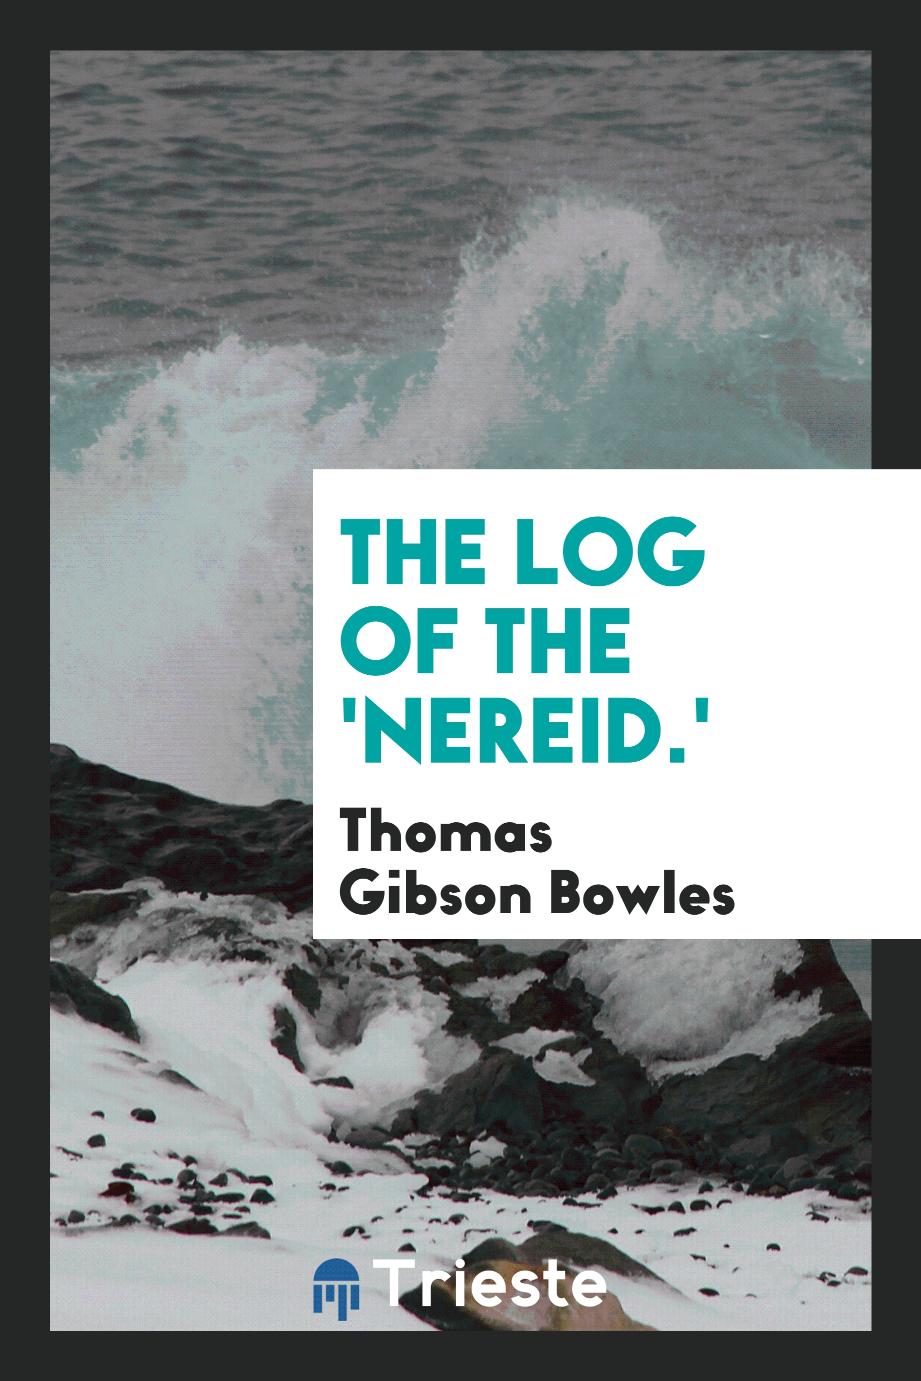 The log of the 'Nereid.'